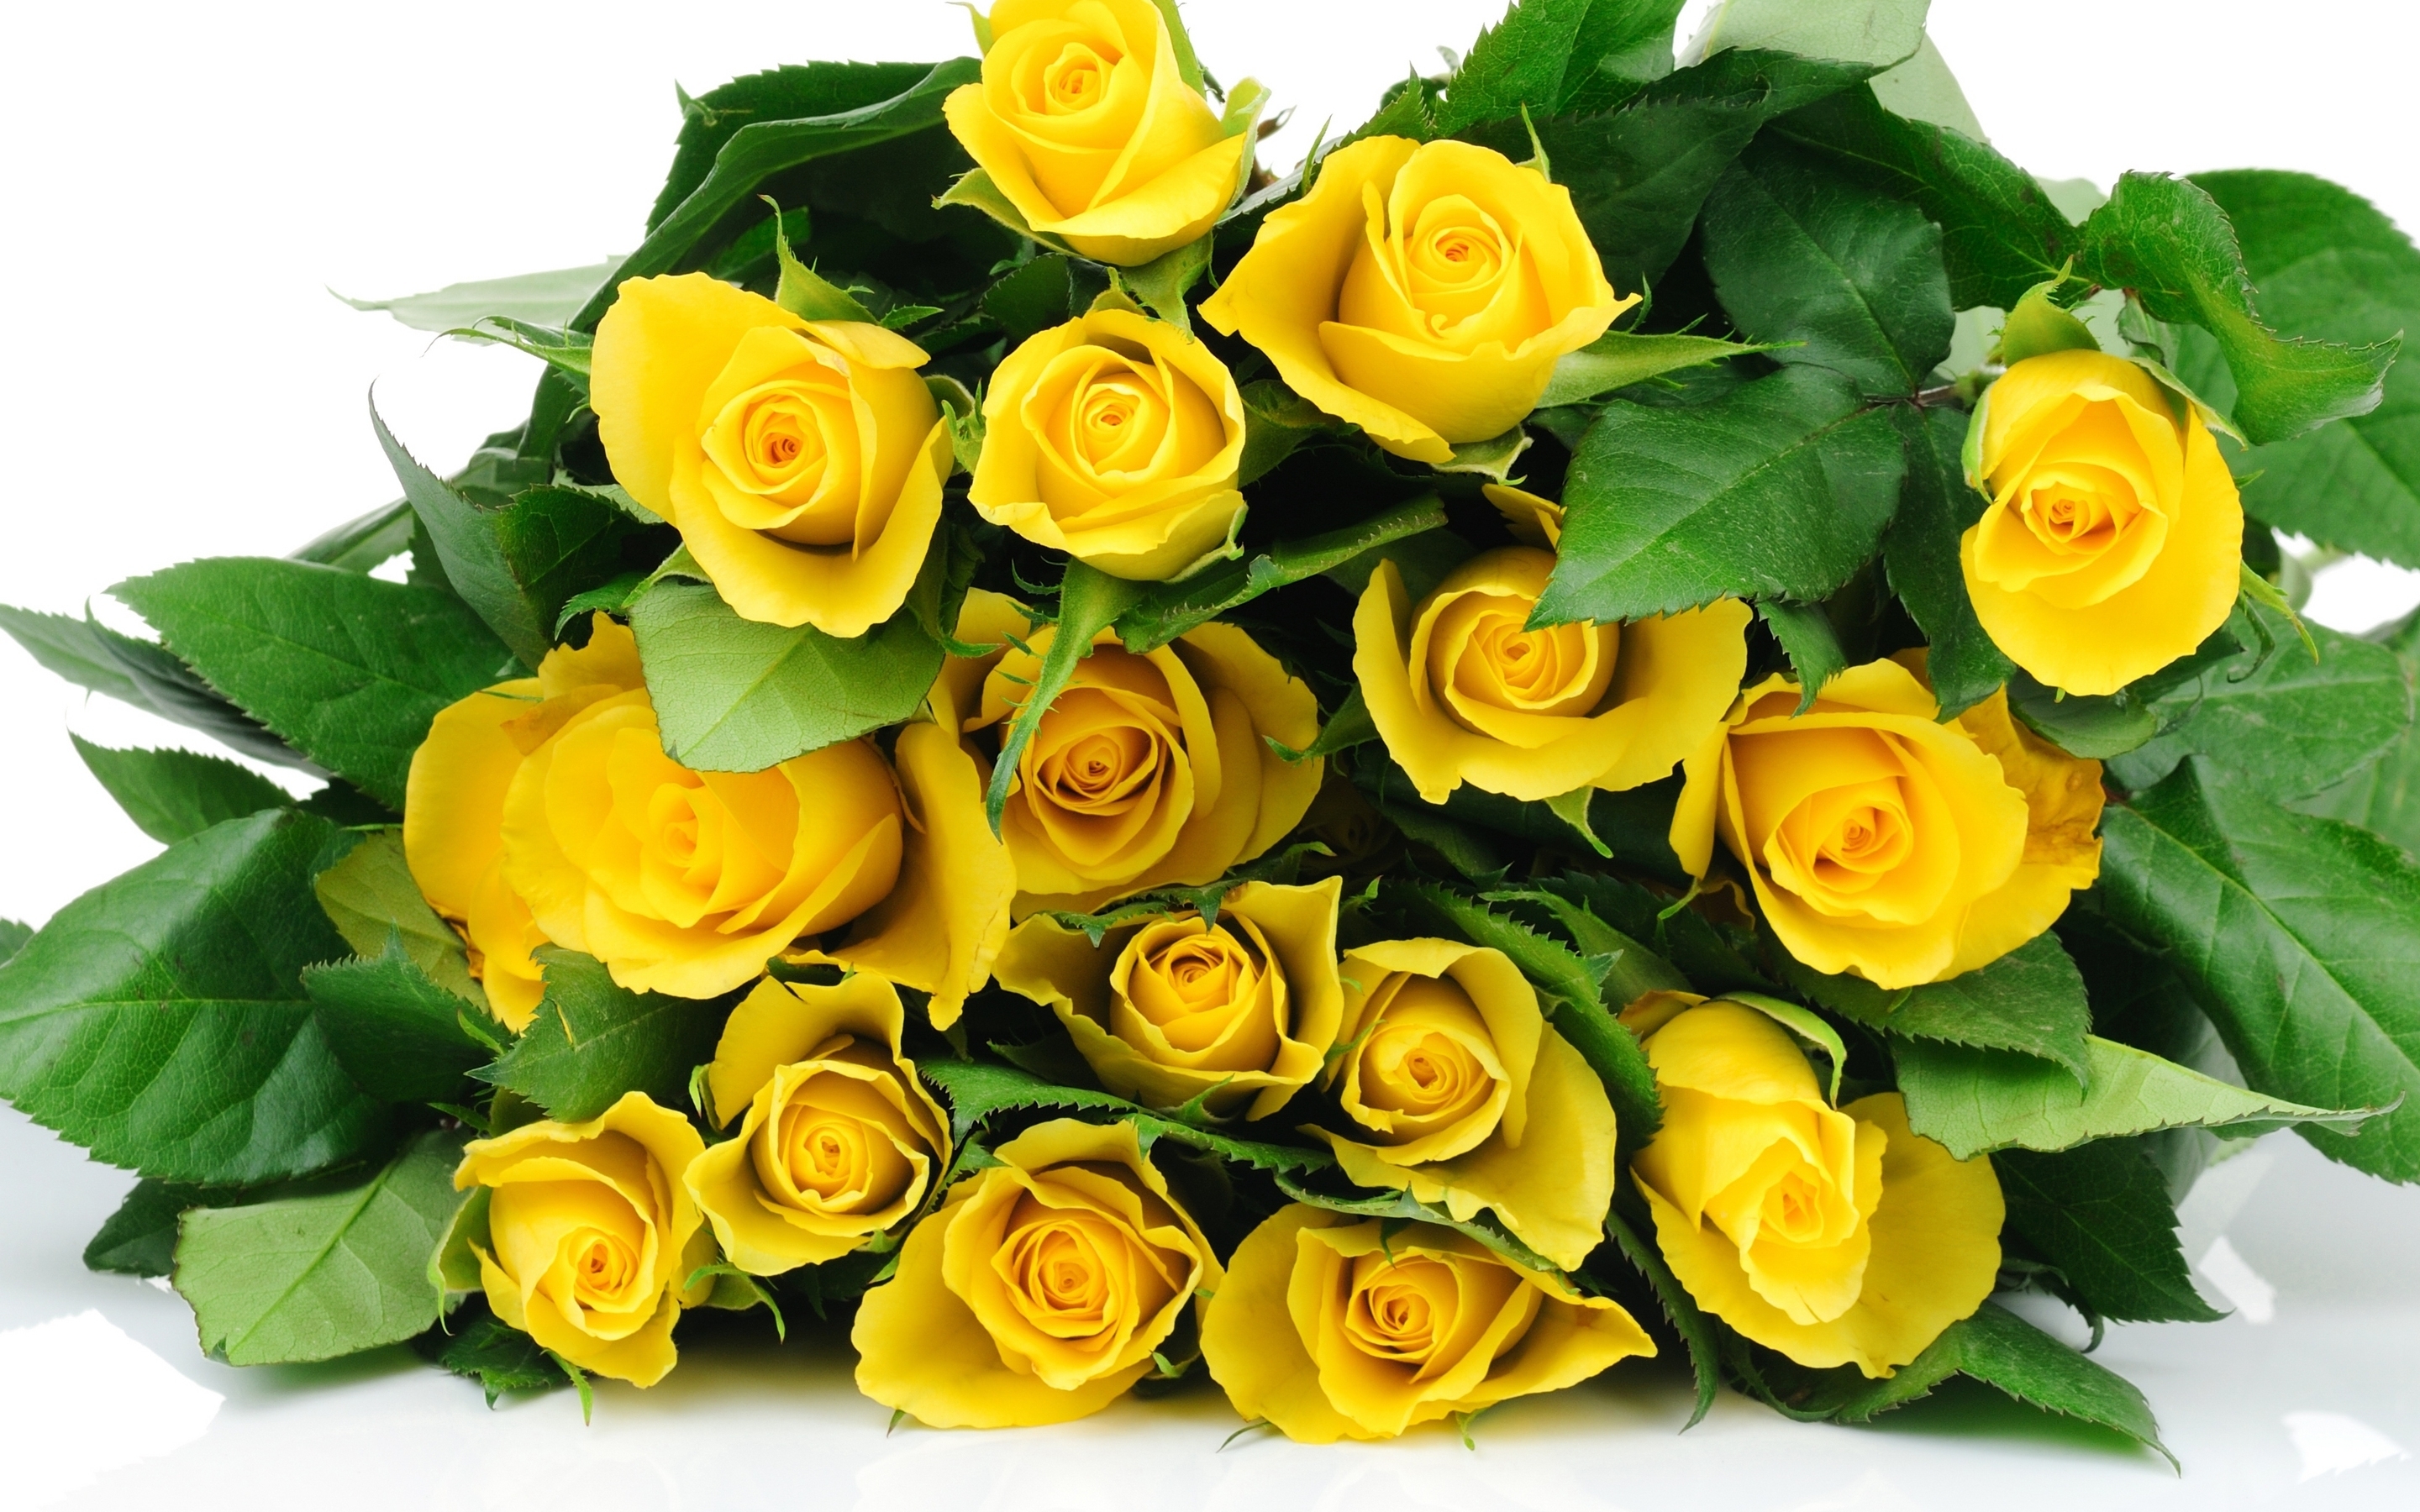 Yellow Roses Bucket for 2880 x 1800 Retina Display resolution